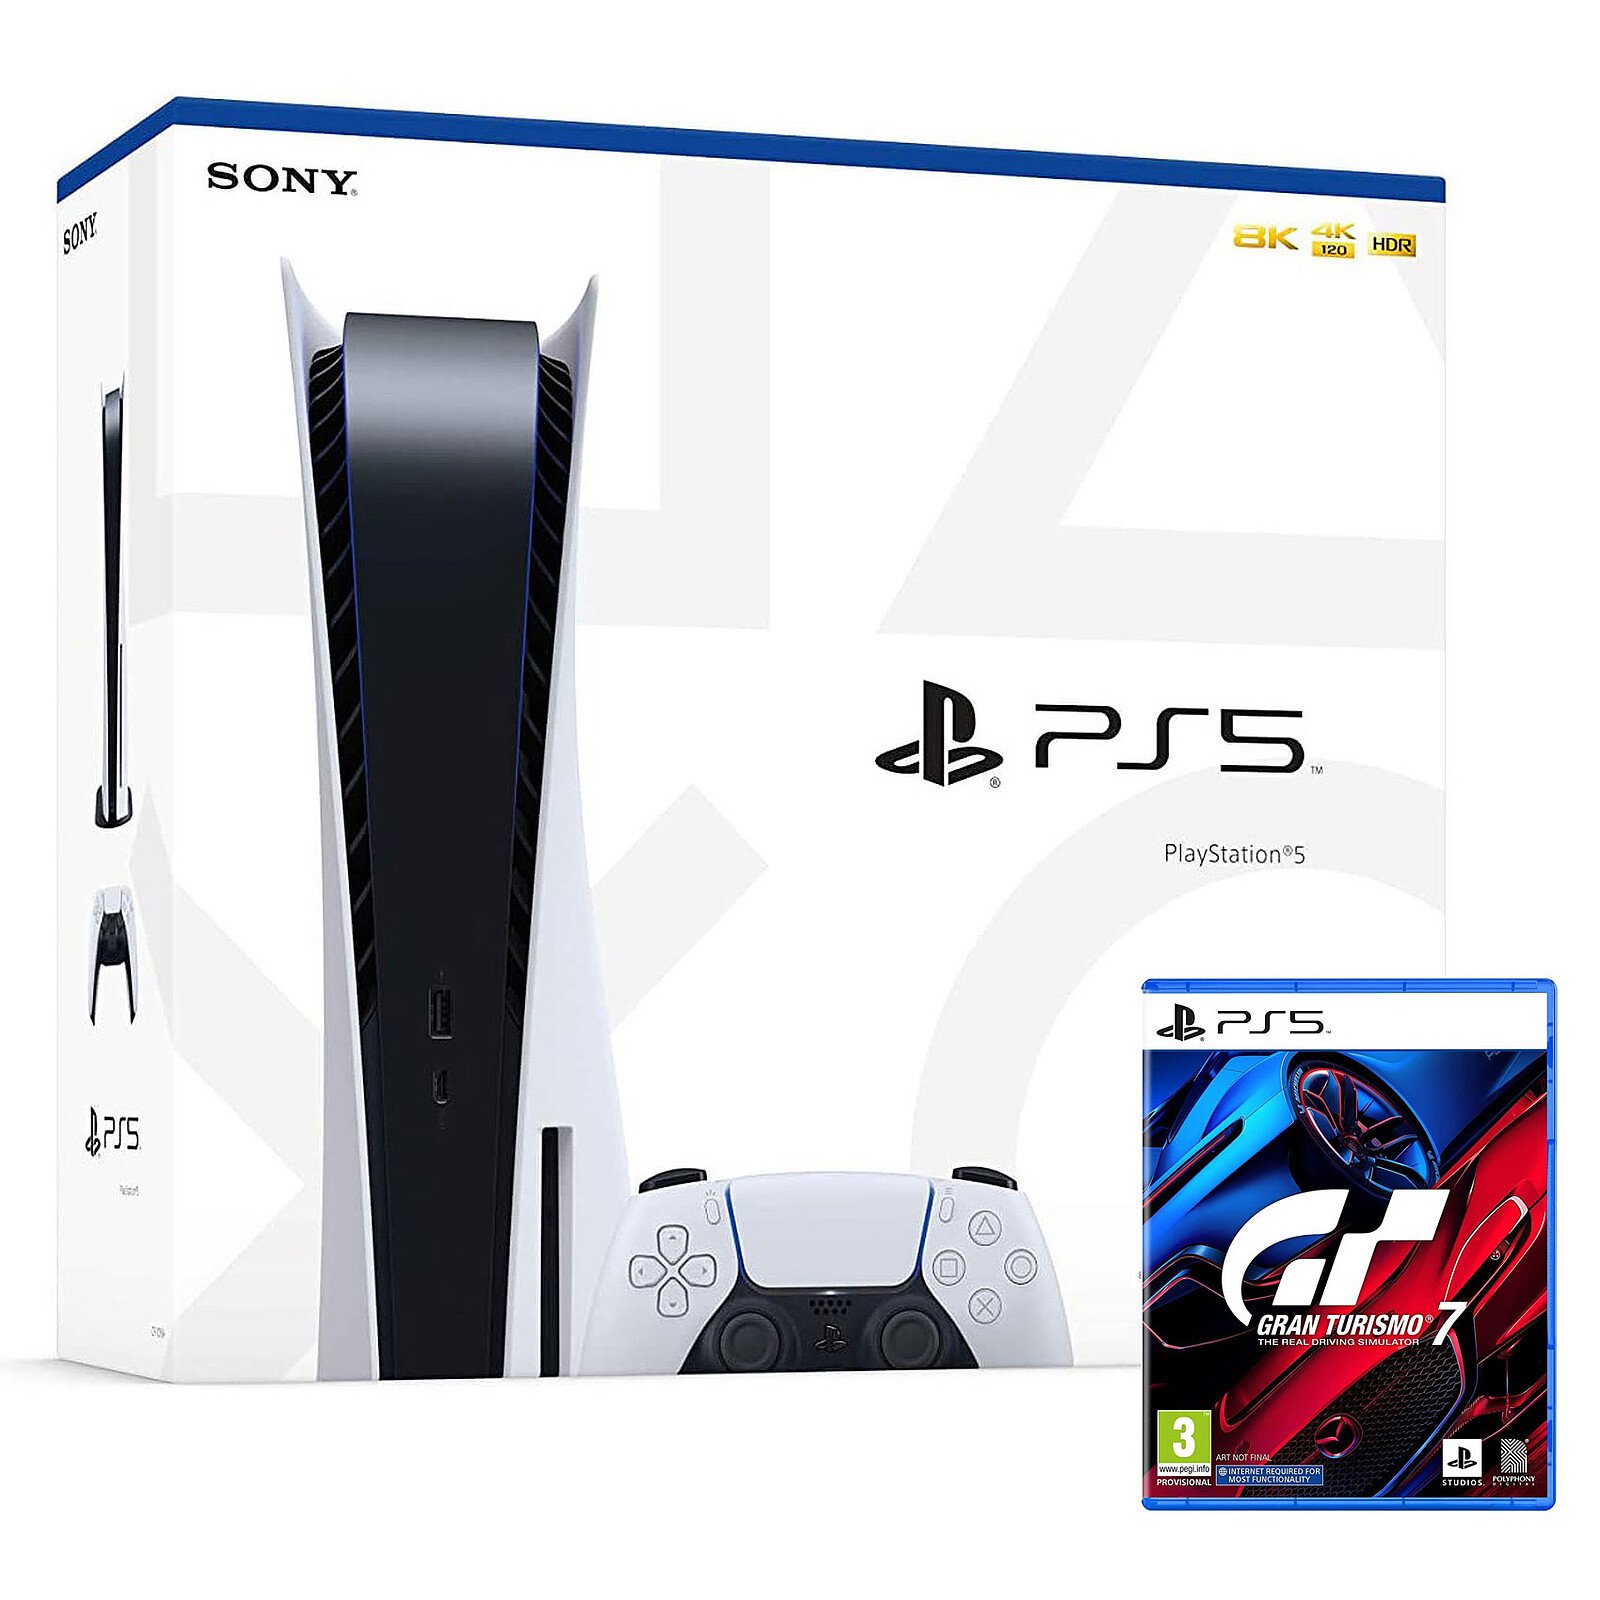 Sony PlayStation 5 console - Turismo warranty LDLC + 3-year - Gran 7 PS5